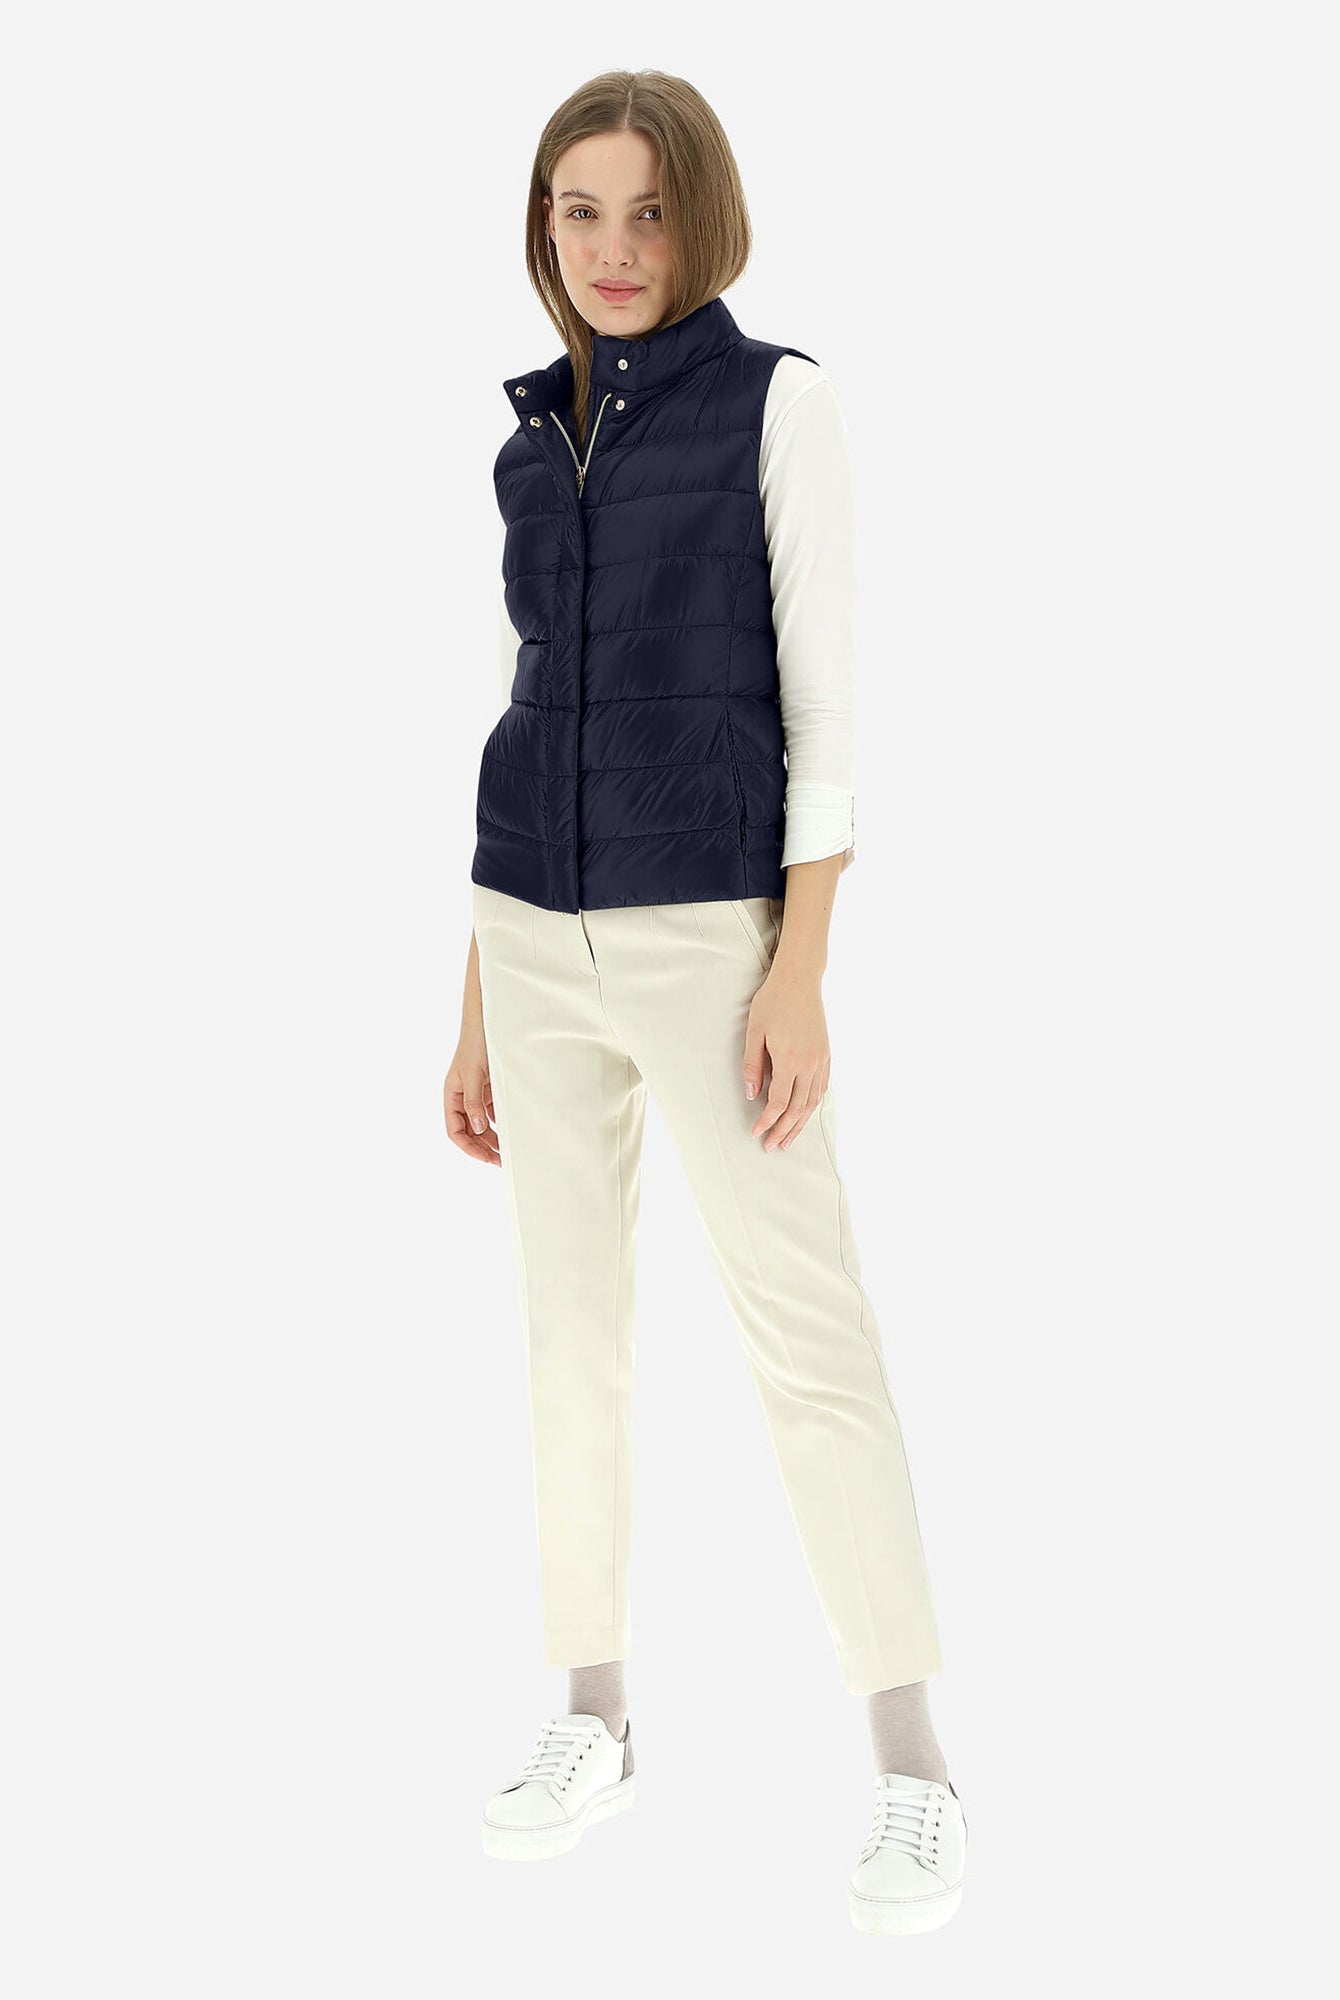 Fitted Short Vest-Outerwear-Herno-Black-40-Mercantile Portland